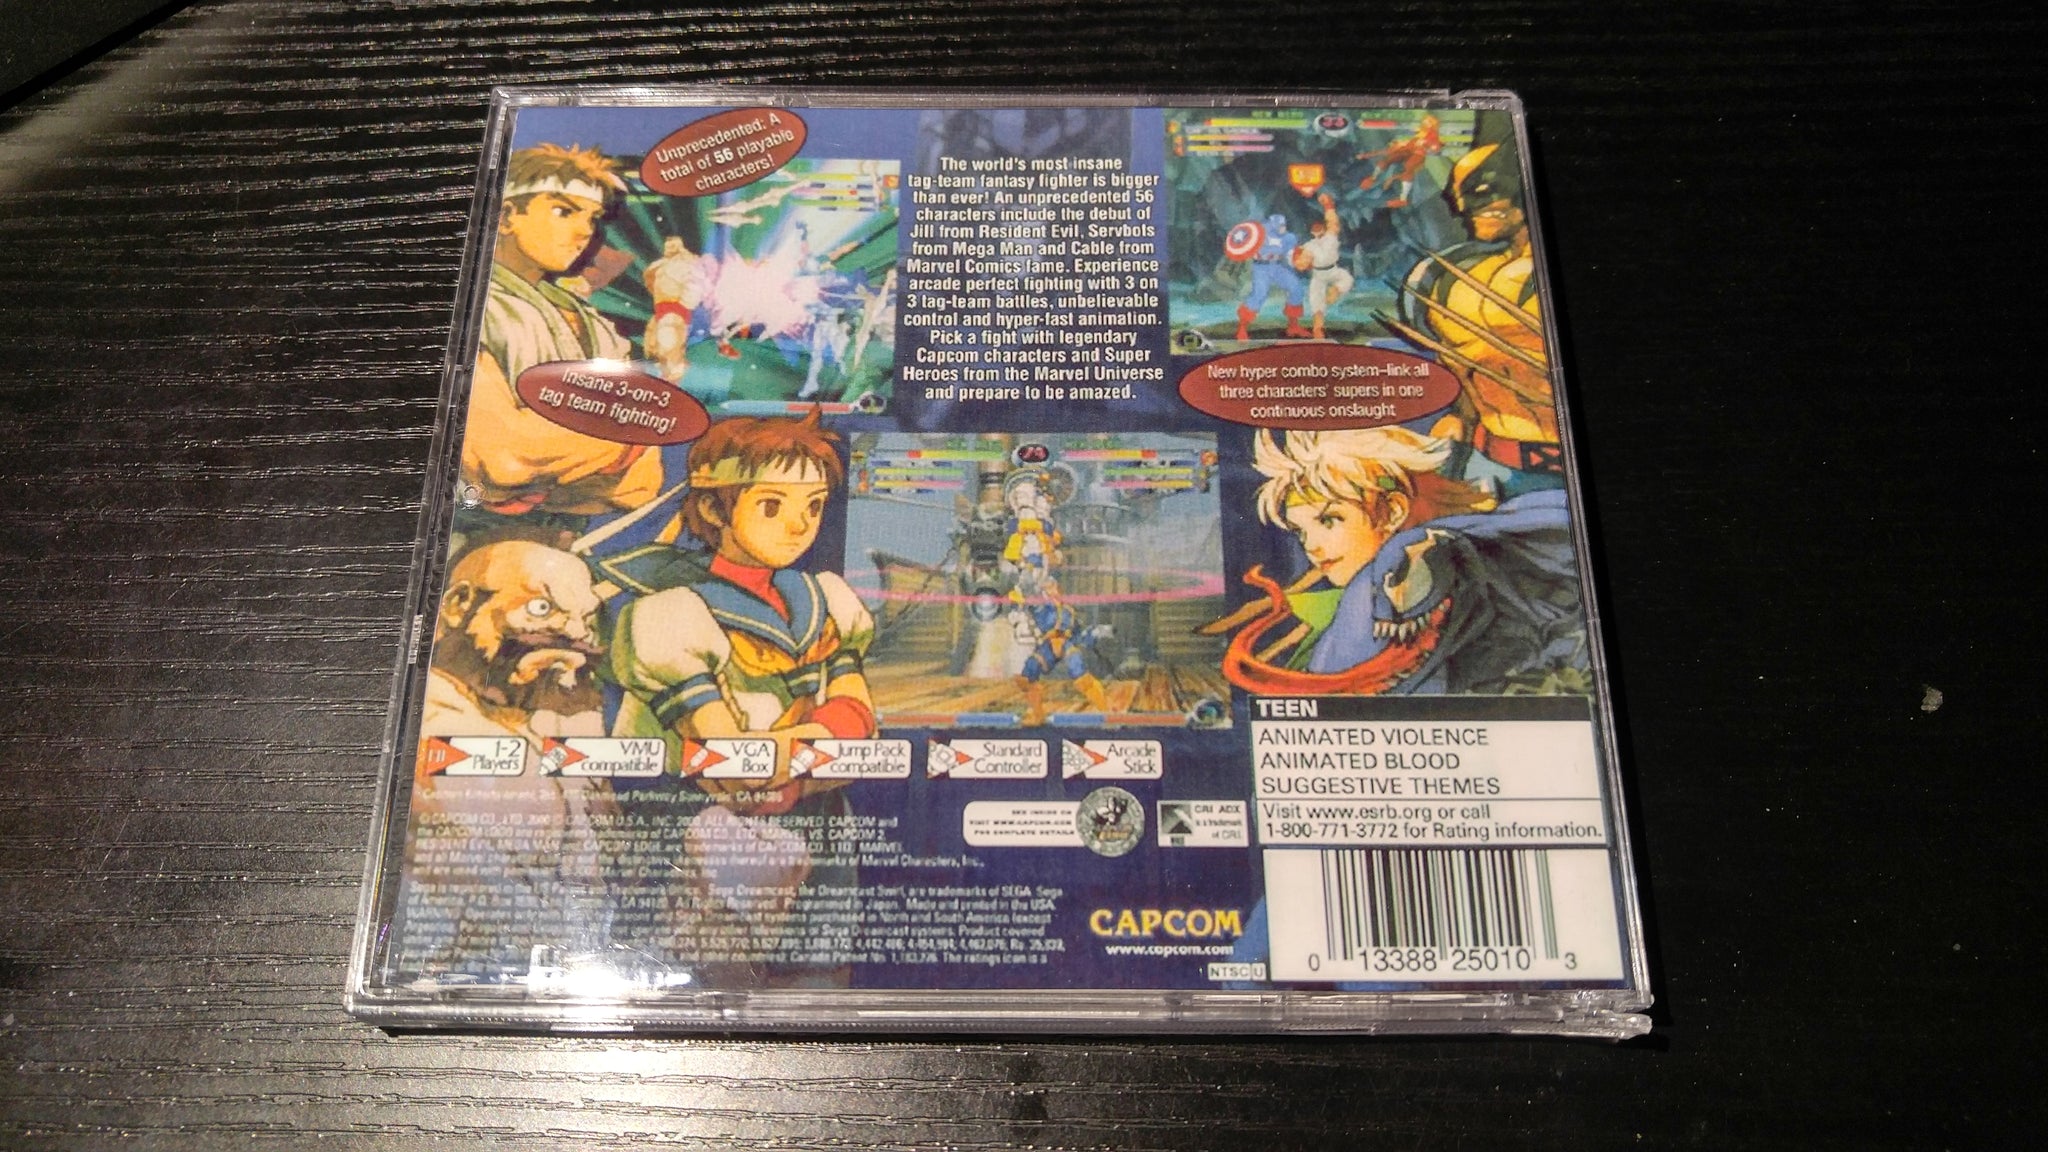 Marvel Vs Capcom 2 Sega Dreamcast Nightwing Video Game Reproductions 